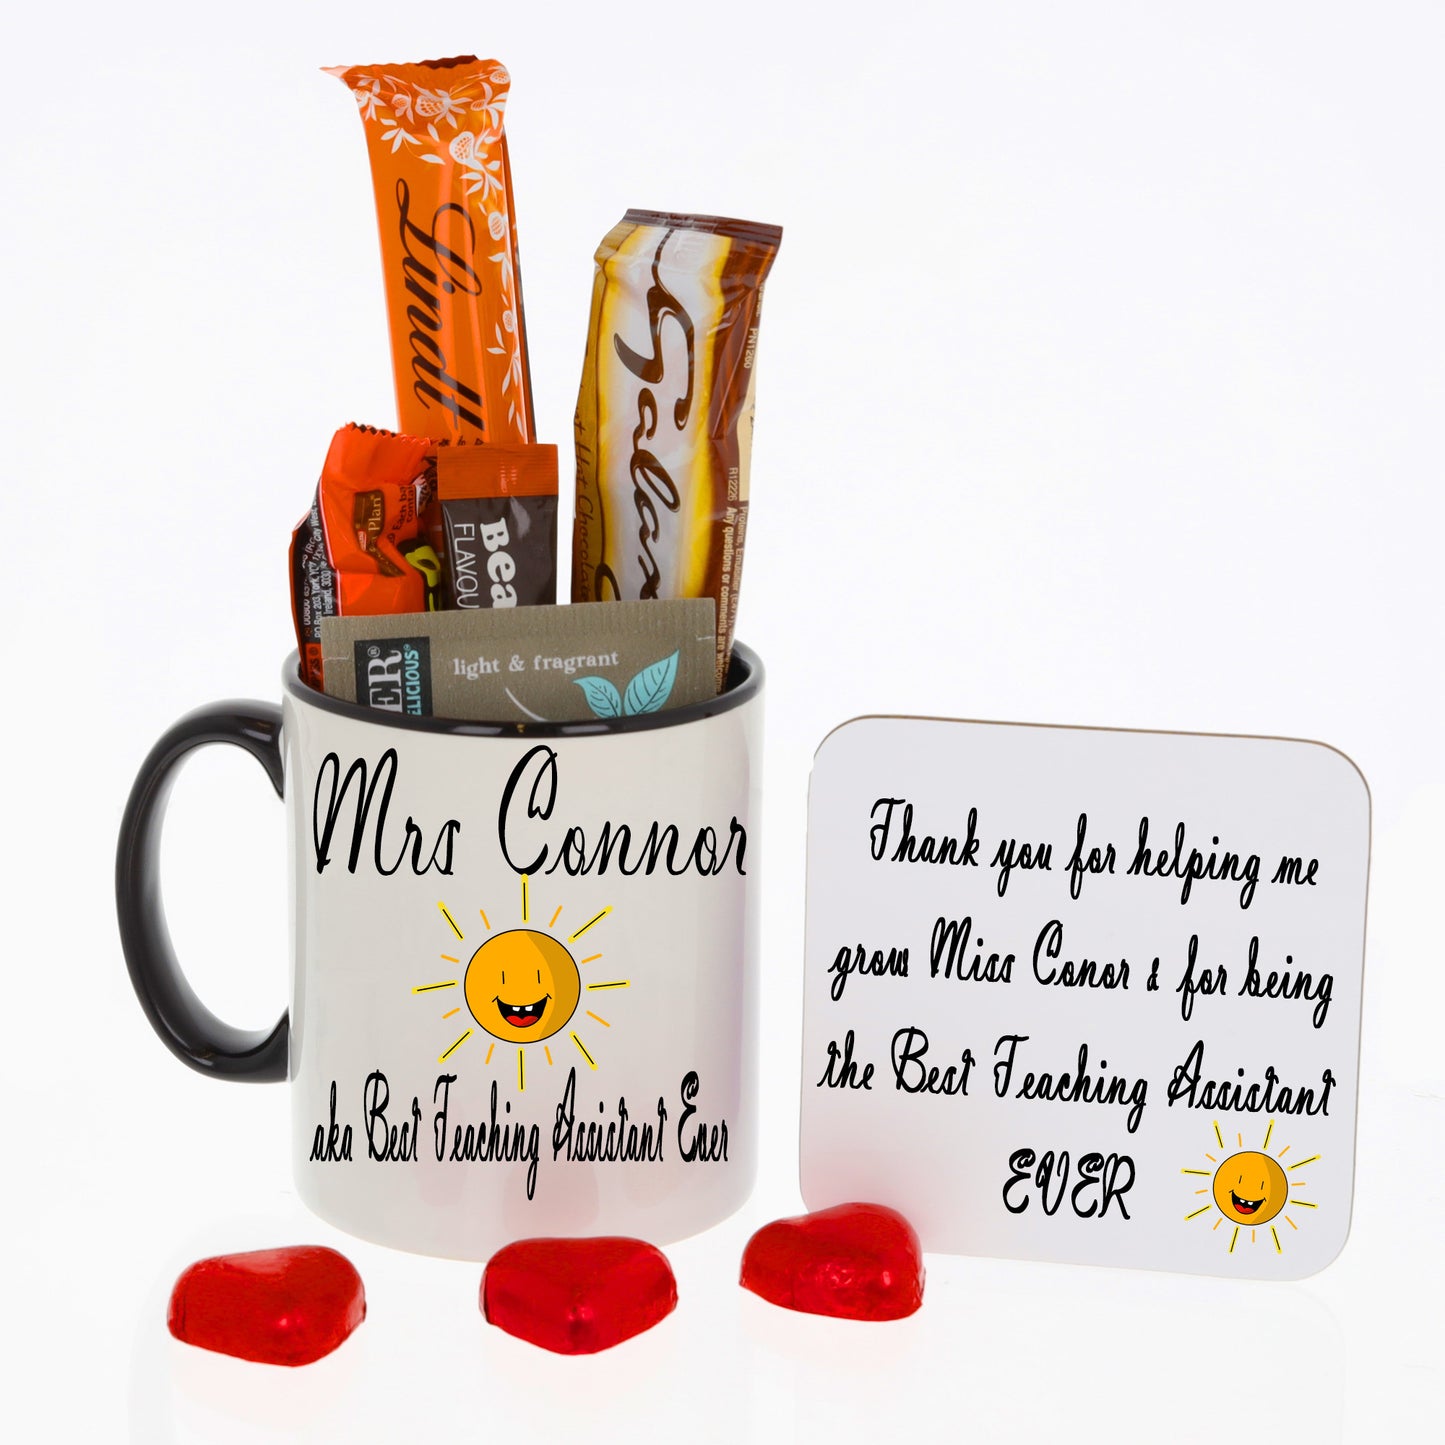 Personalised Best Teaching Assistant Mug and/or Coaster Gift  - Always Looking Good - Mug & Coaster Set - Filled  